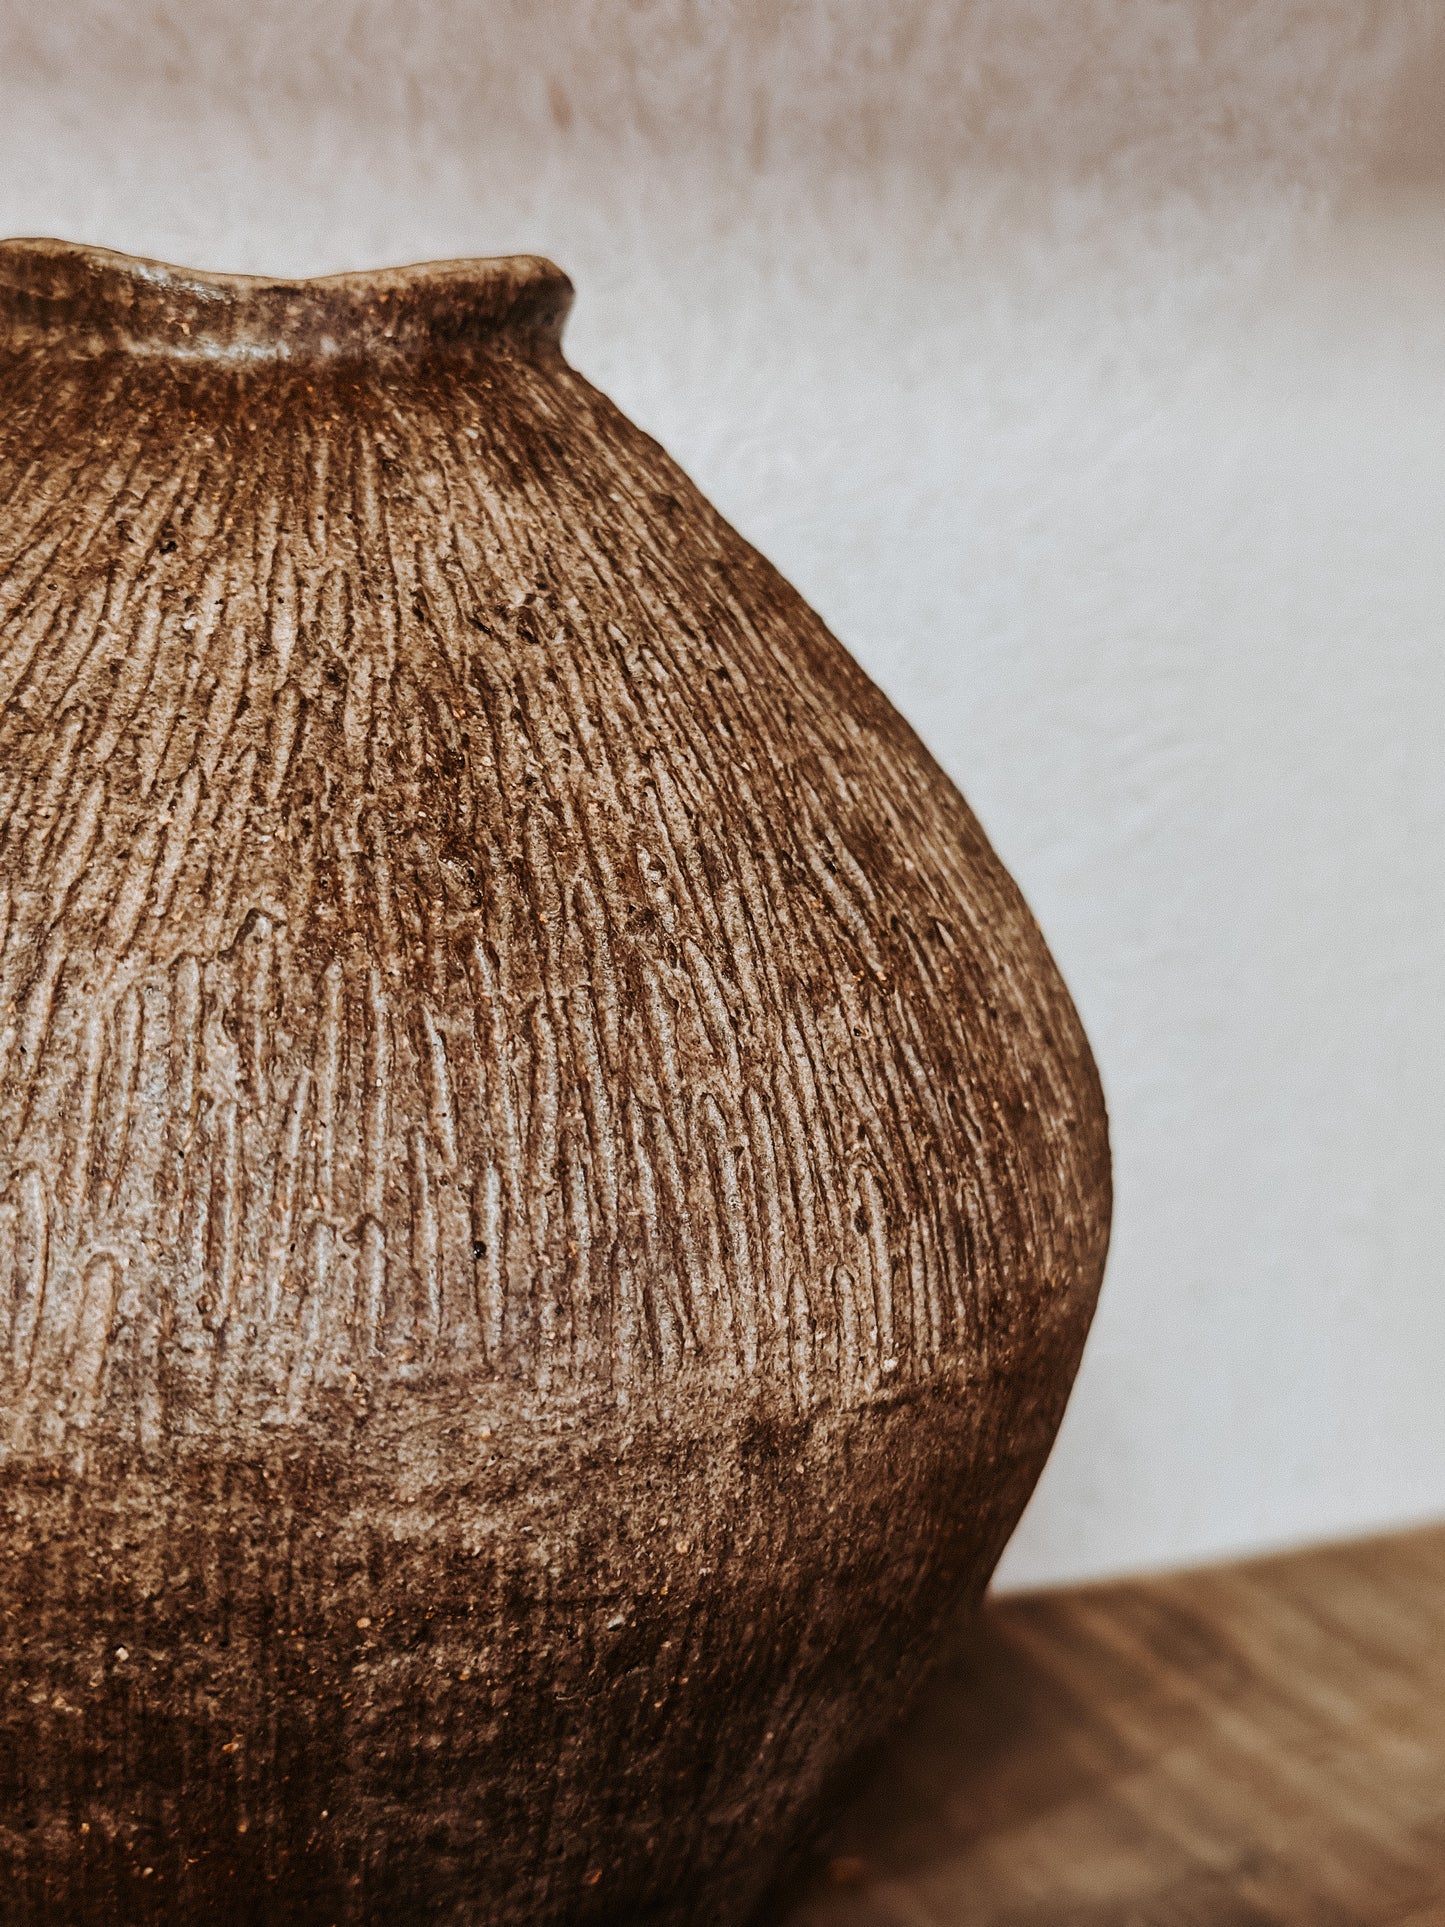 Earth Carved Vase, Void Ceramics